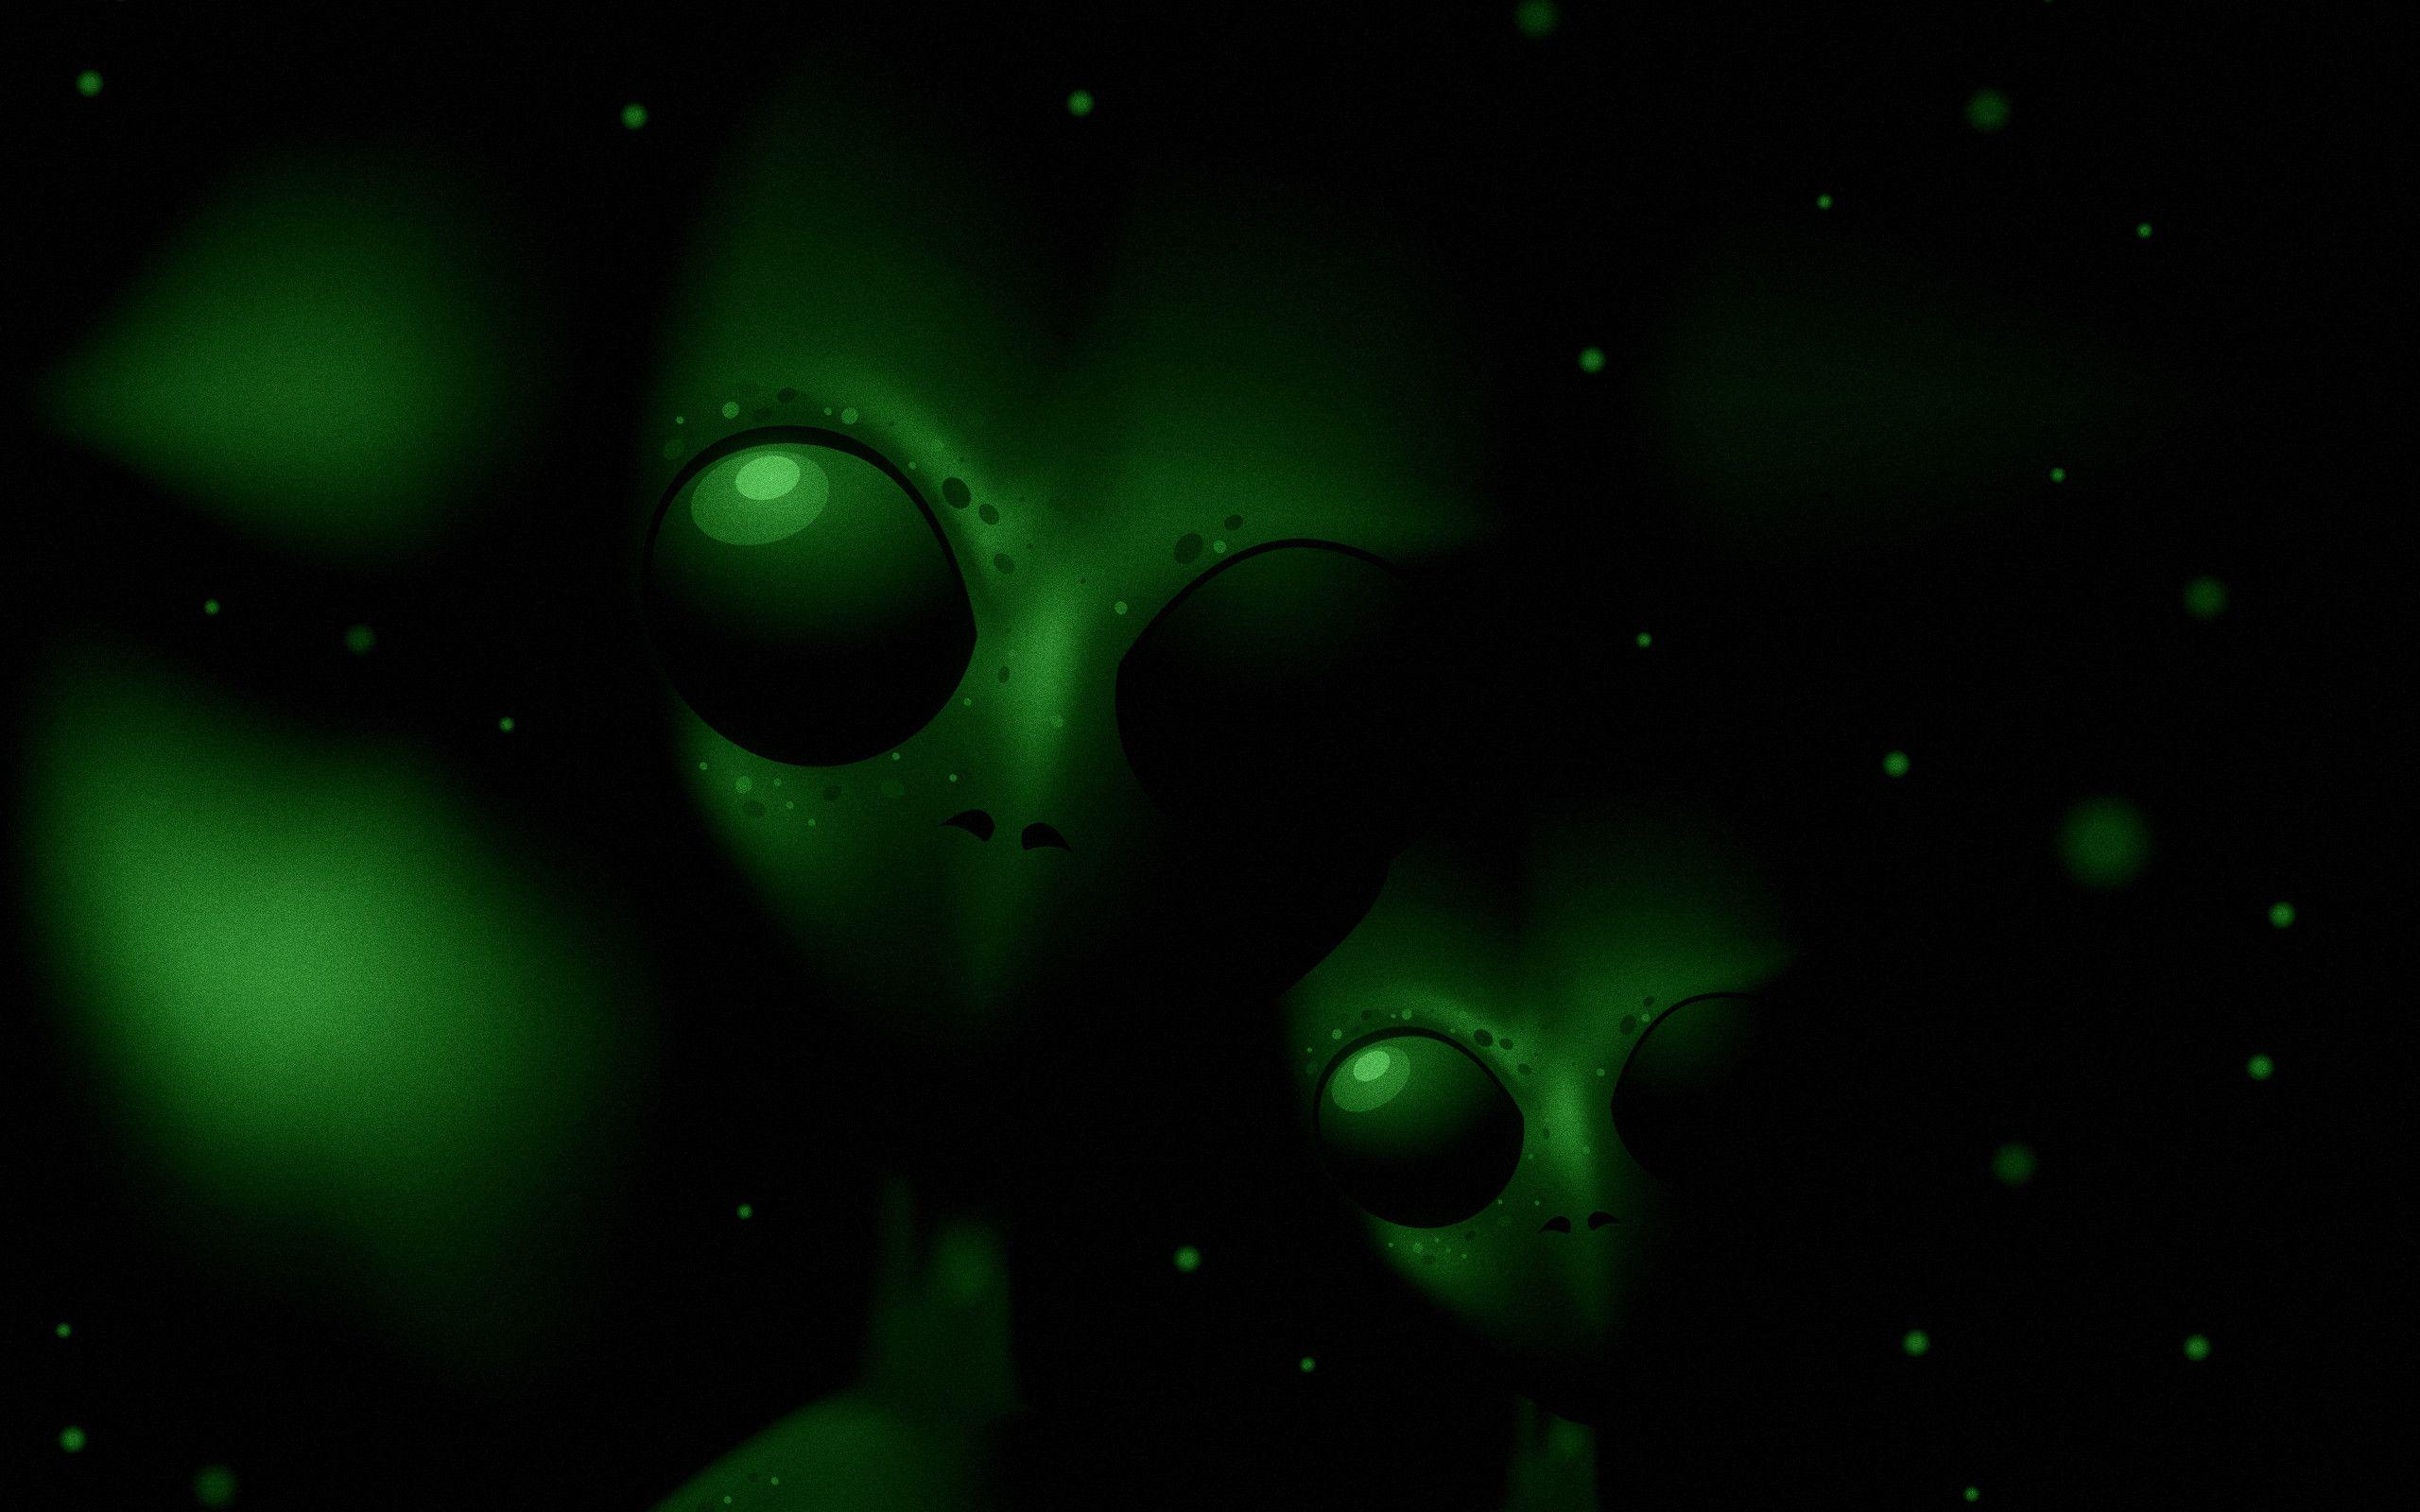 Alien Background